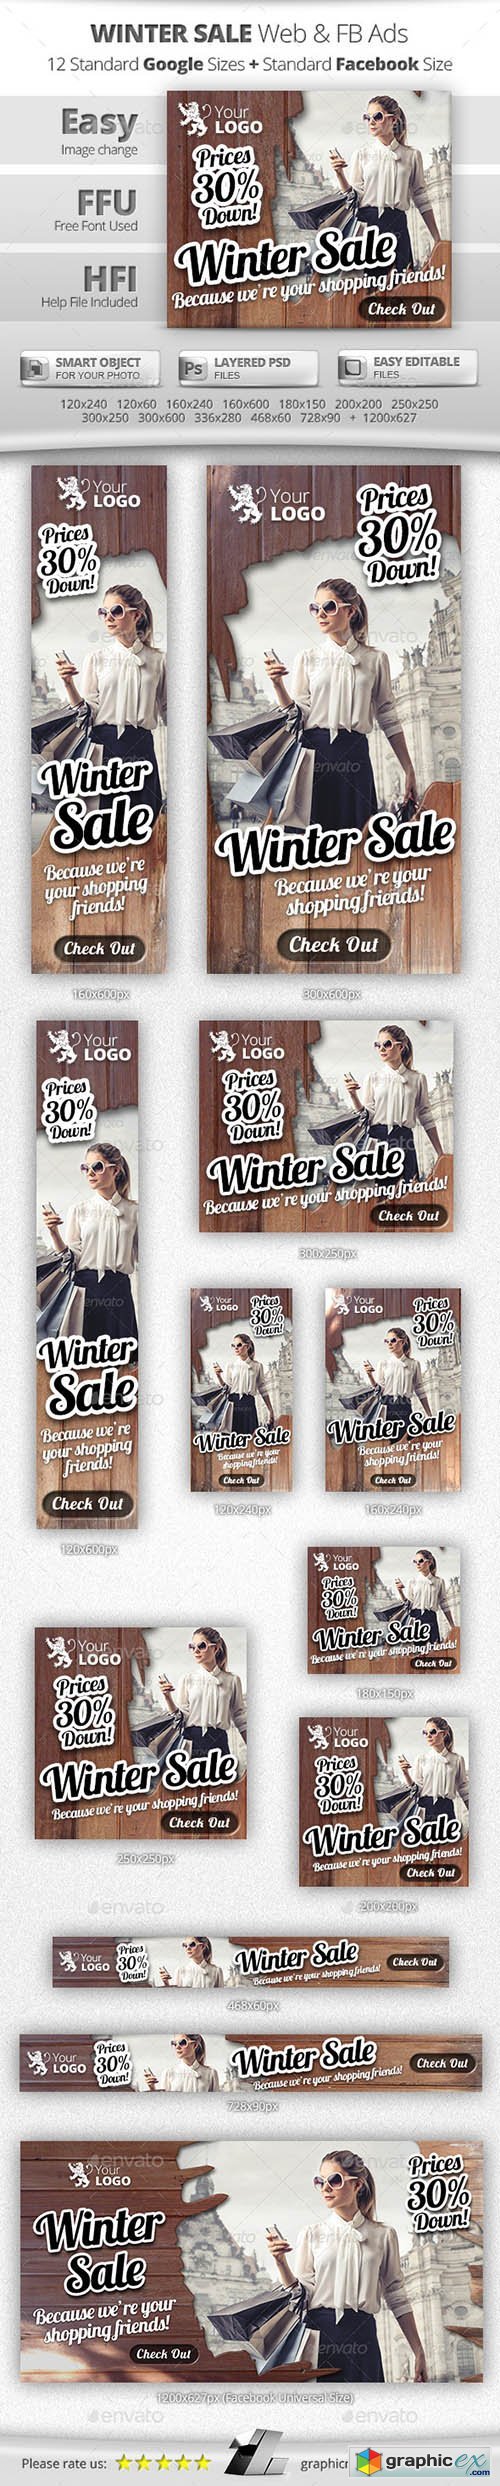 Winter Sale Web & Facebook Banners